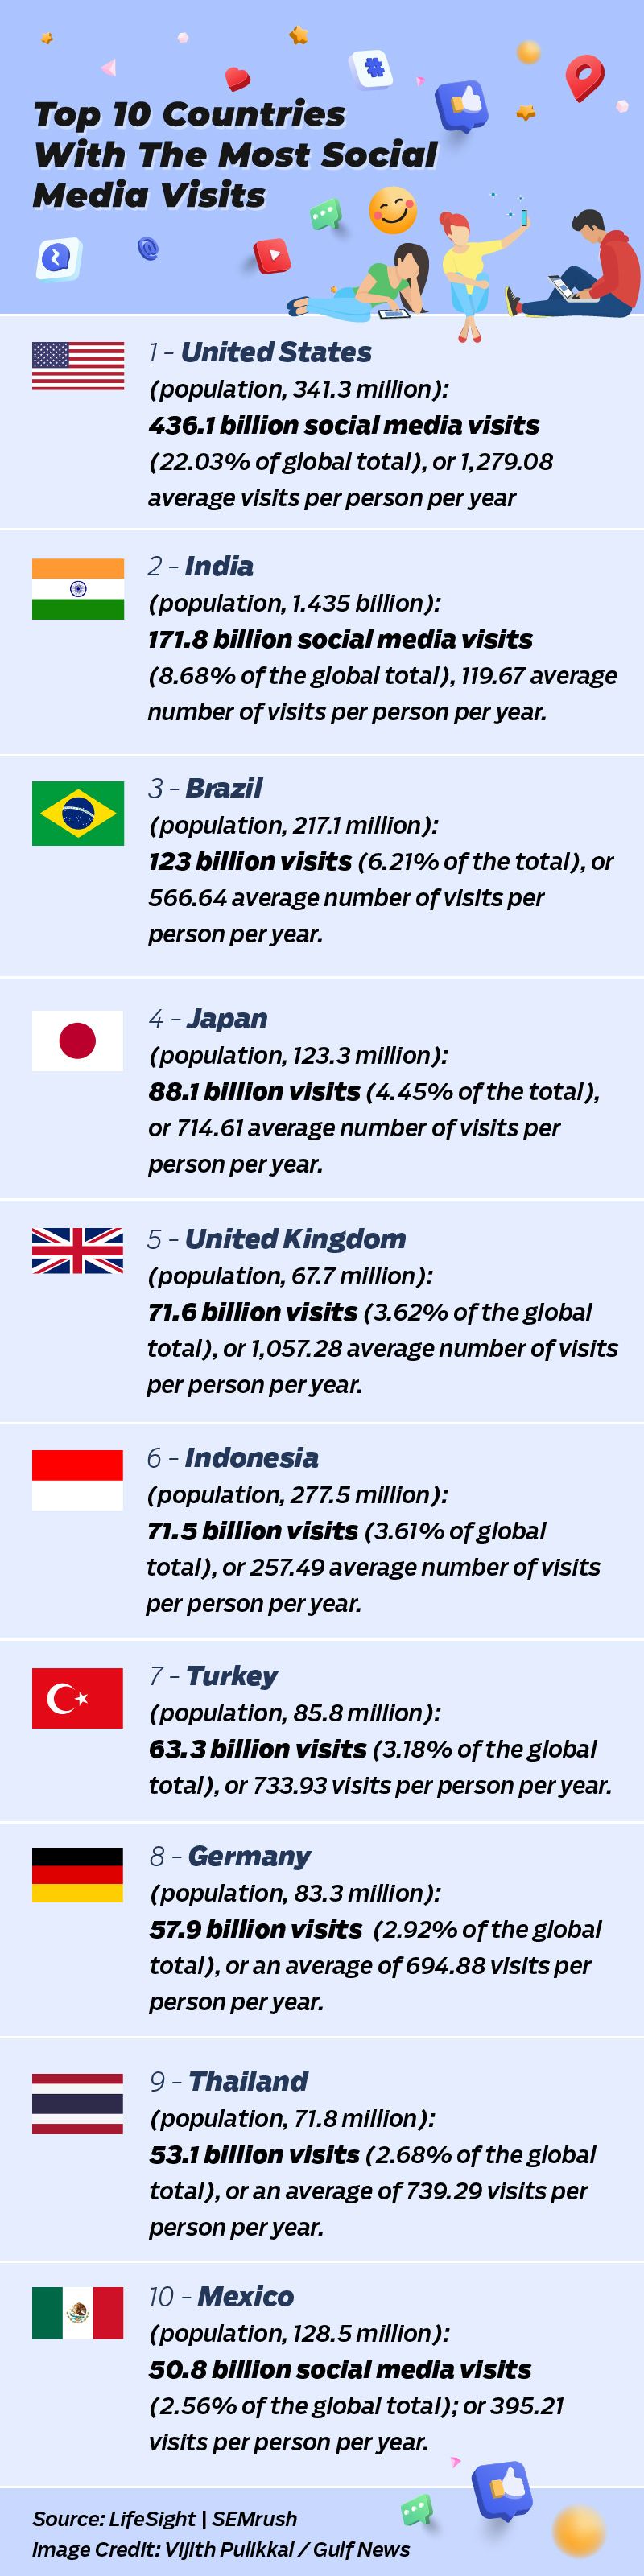 Top 10 countries in social media visits